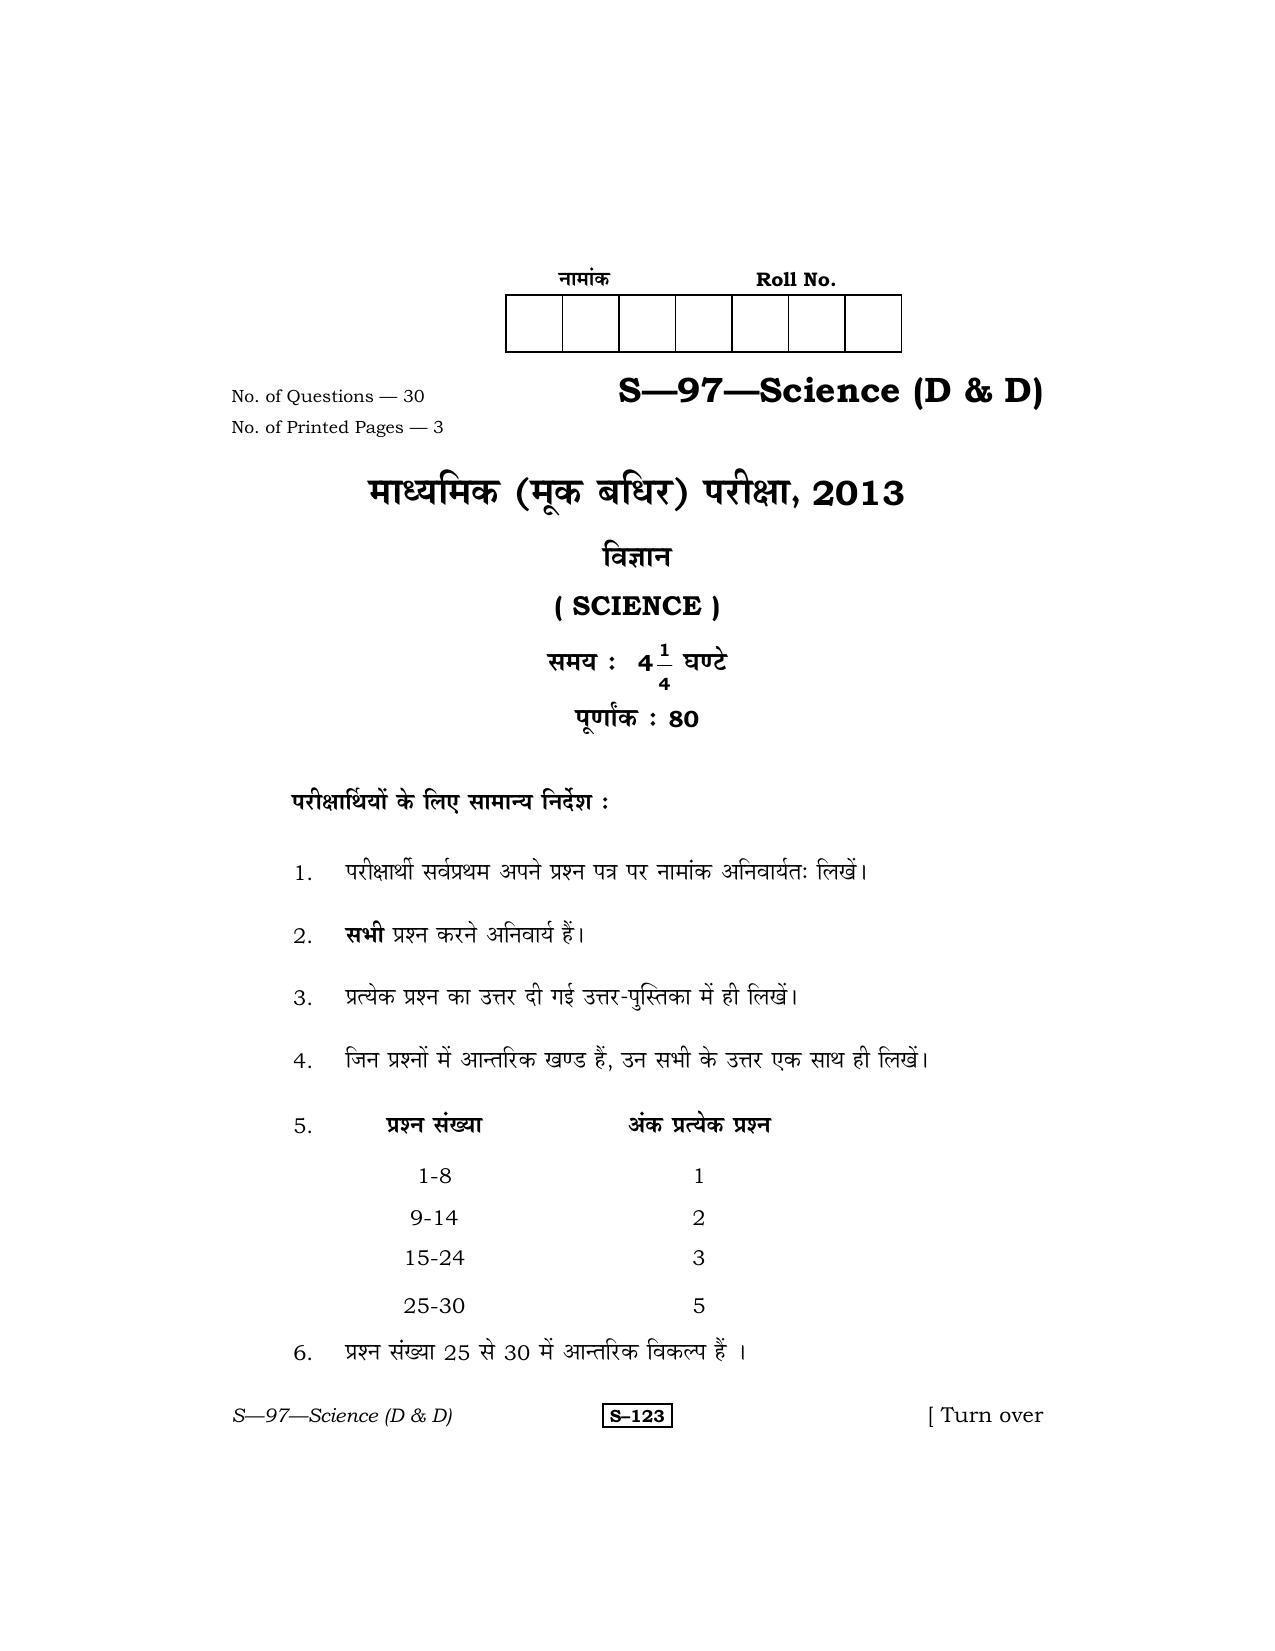 RBSE Class 10 Science (D & D) 2013 Question Paper - Page 1